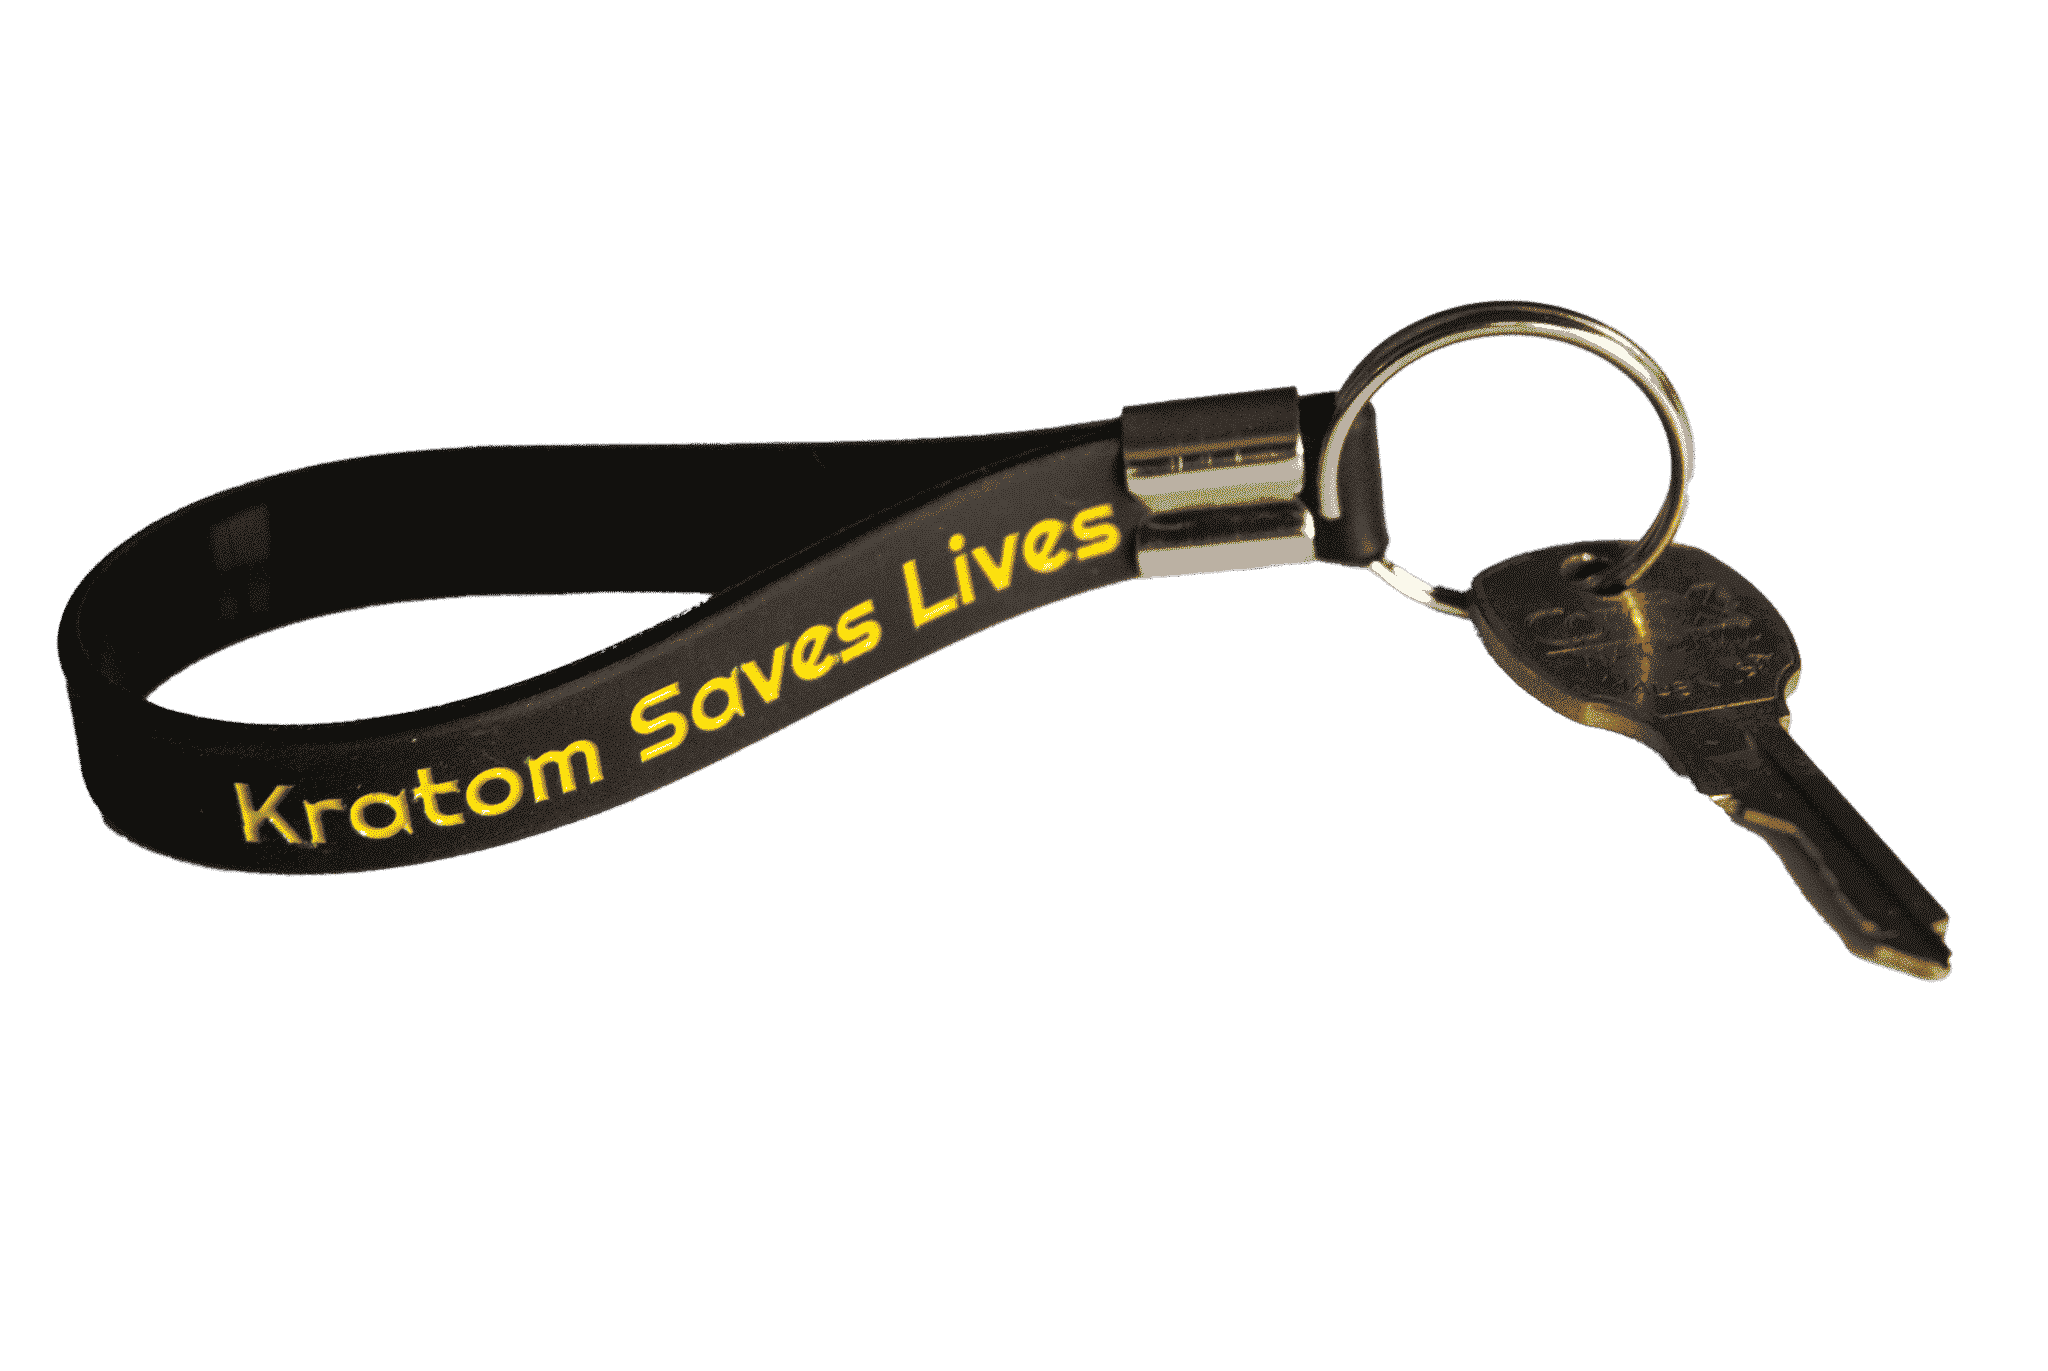 Kratom Saves Lives Keychain